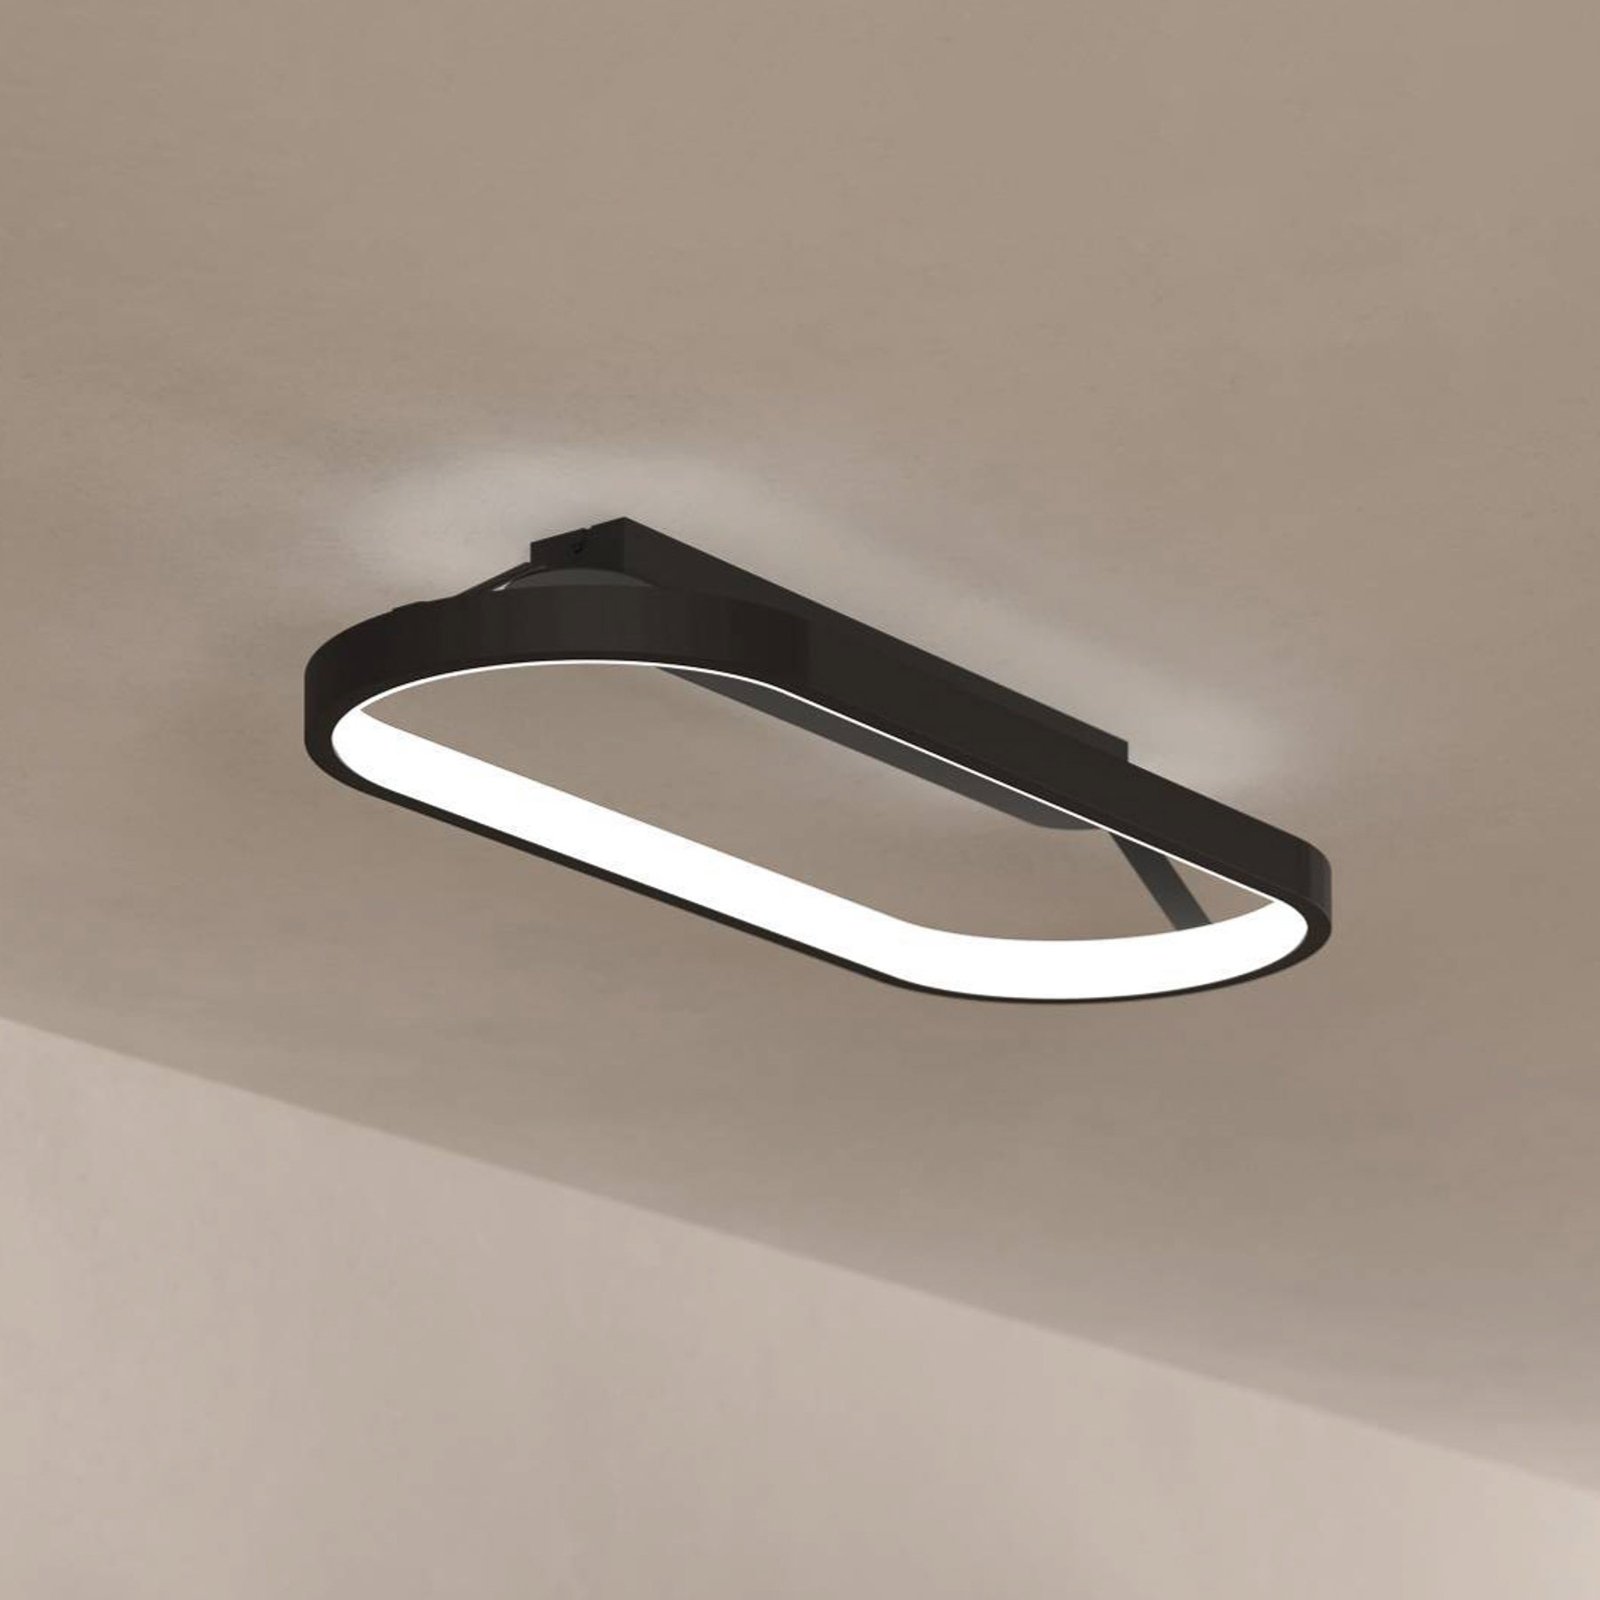 Codriales LED ceiling light, black